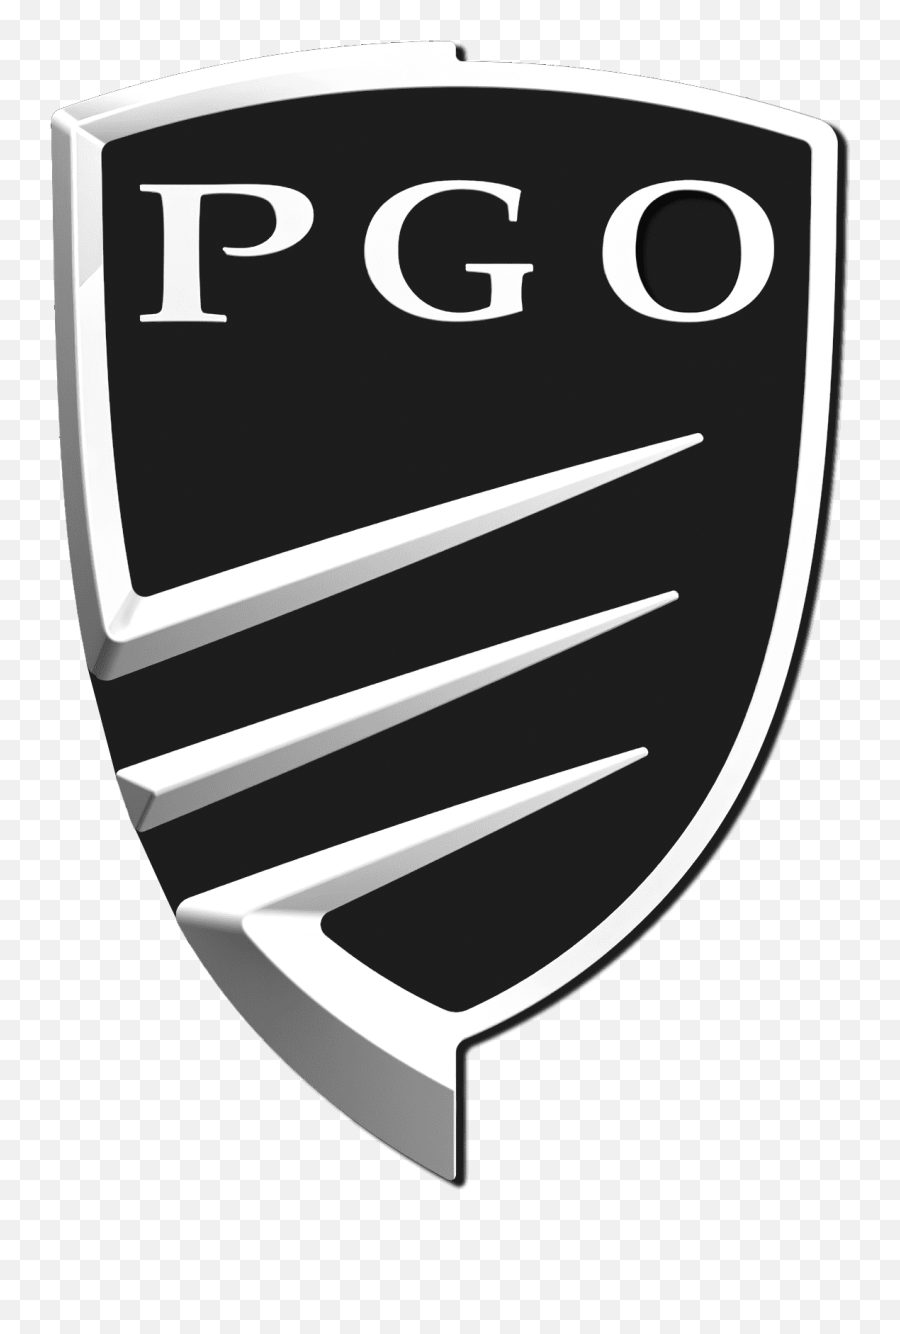 French Car Brands - Pgo Logo Png Car Emoji,Race Cars Logos